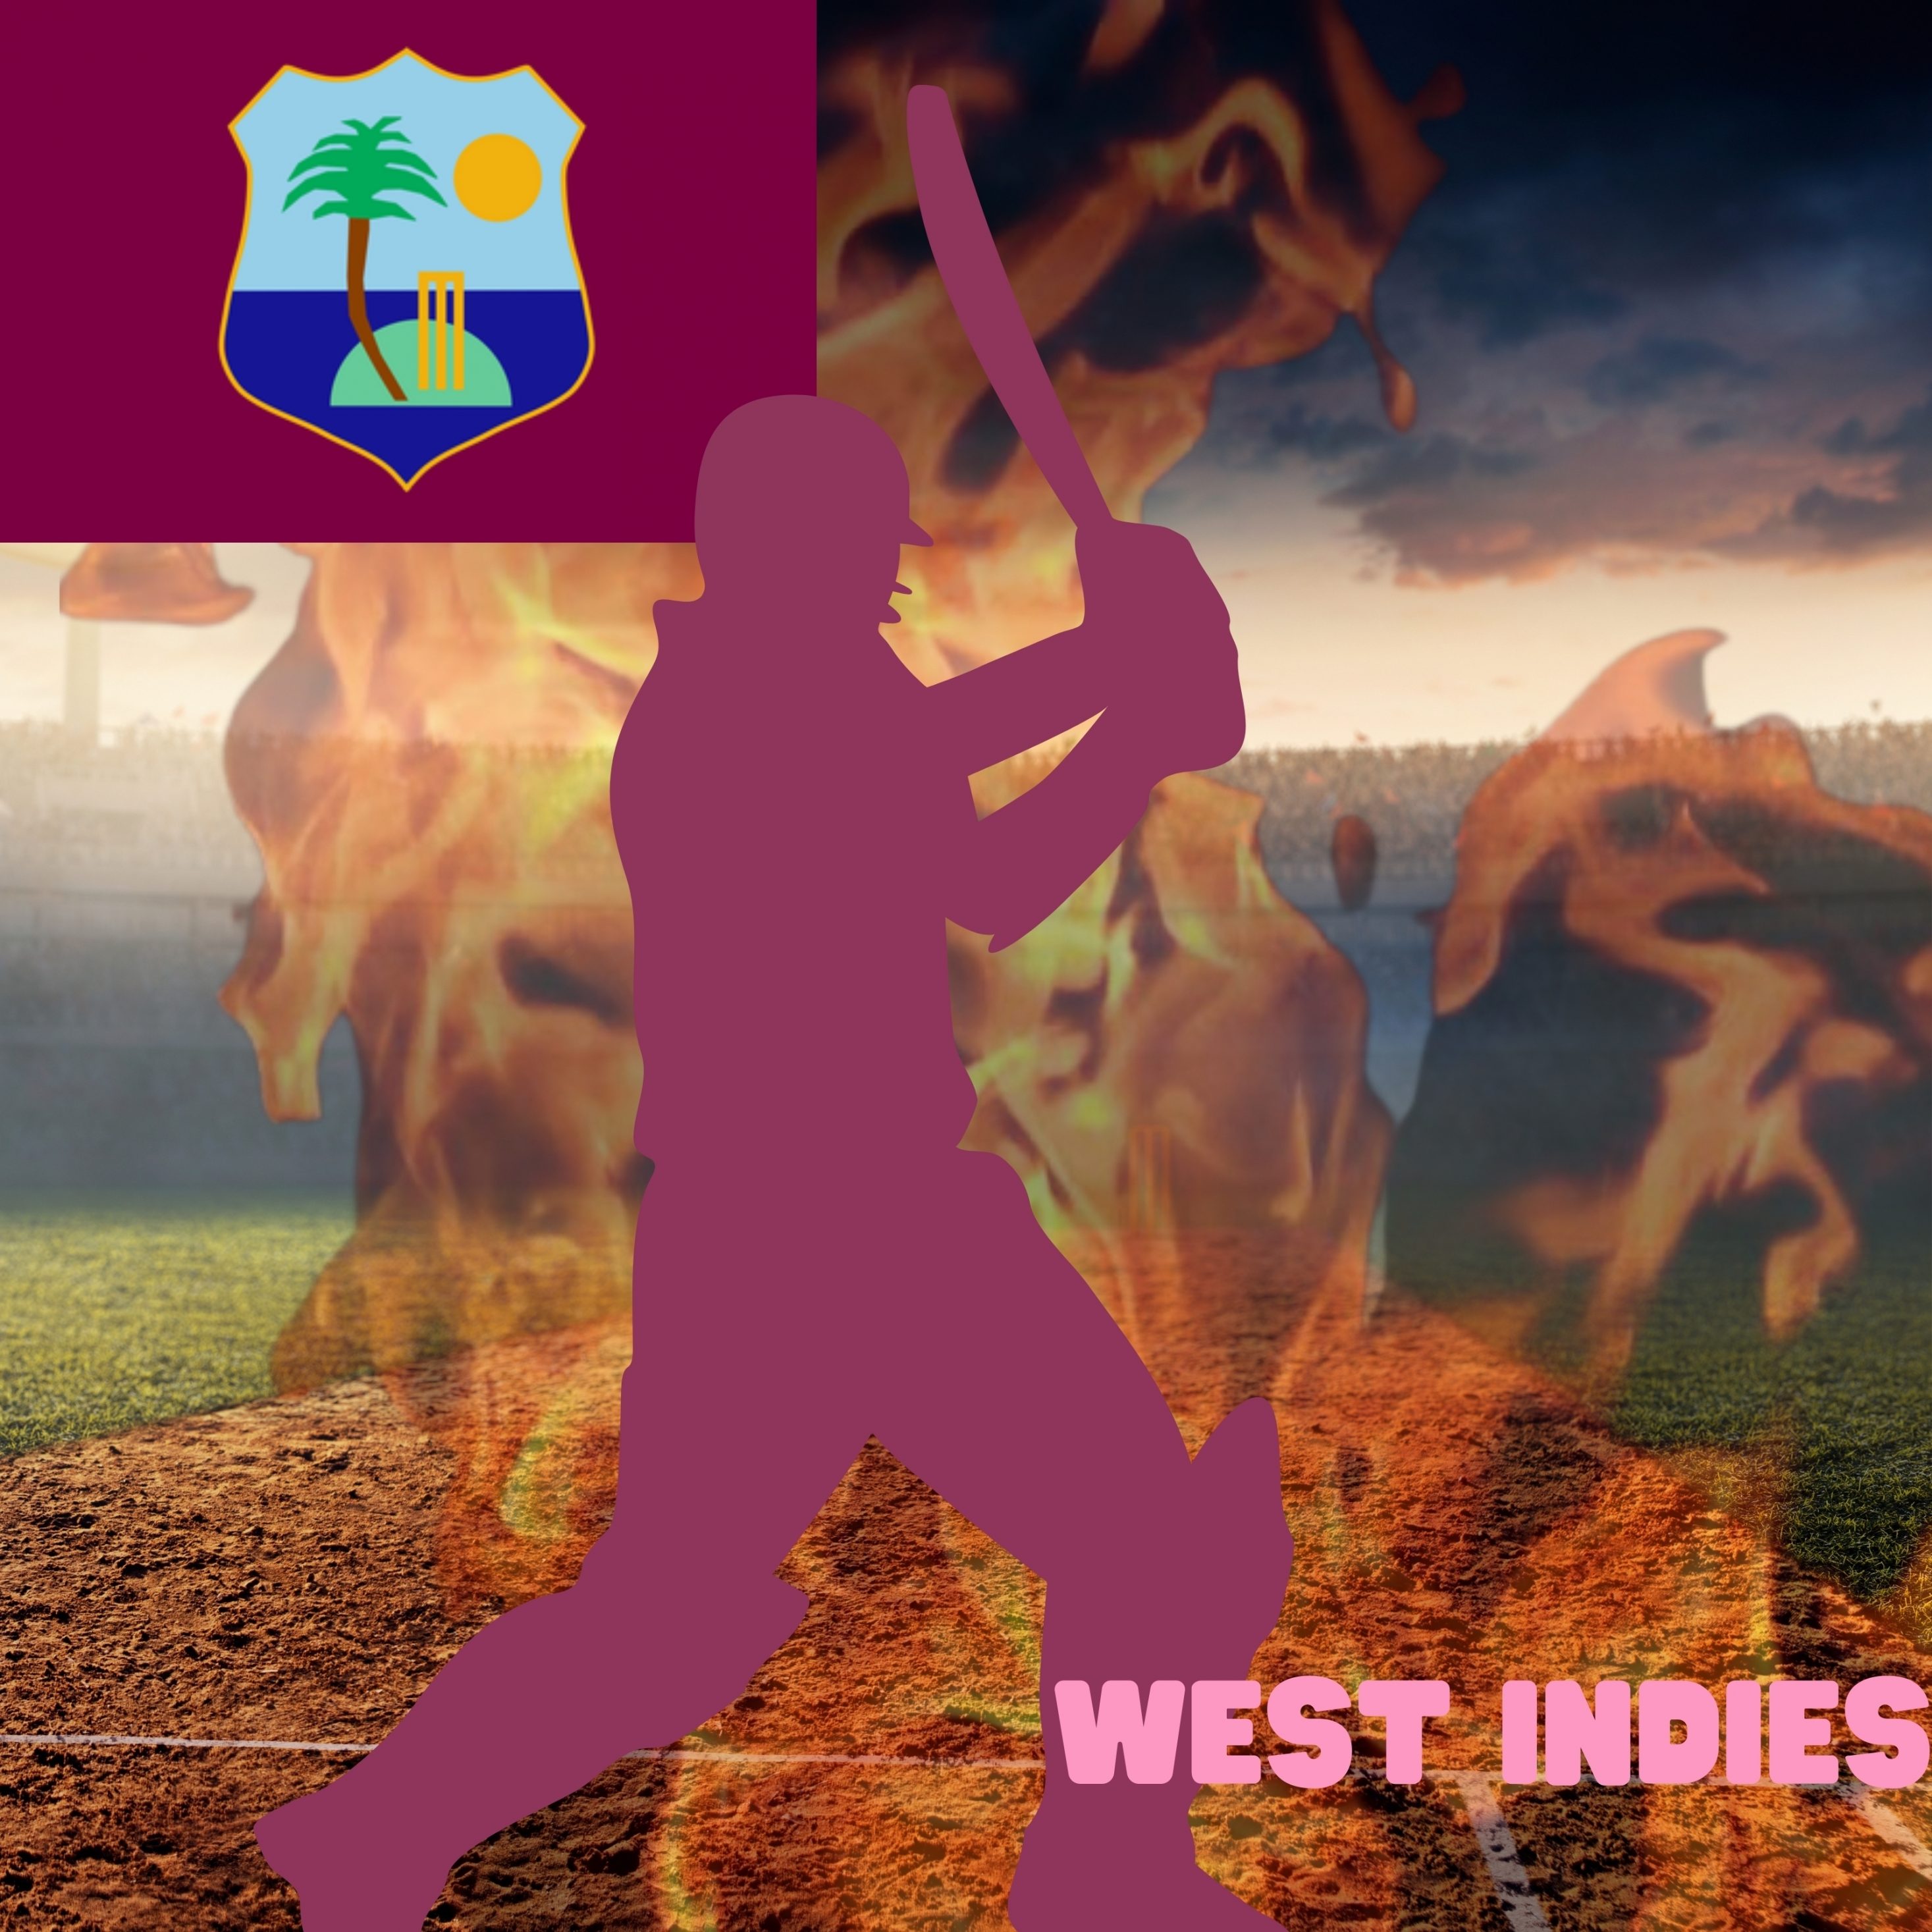 2934x2934 iOS iPad wallpaper 4k West Indies Cricket Stadium iPad Wallpaper 2934x2934 pixels resolution